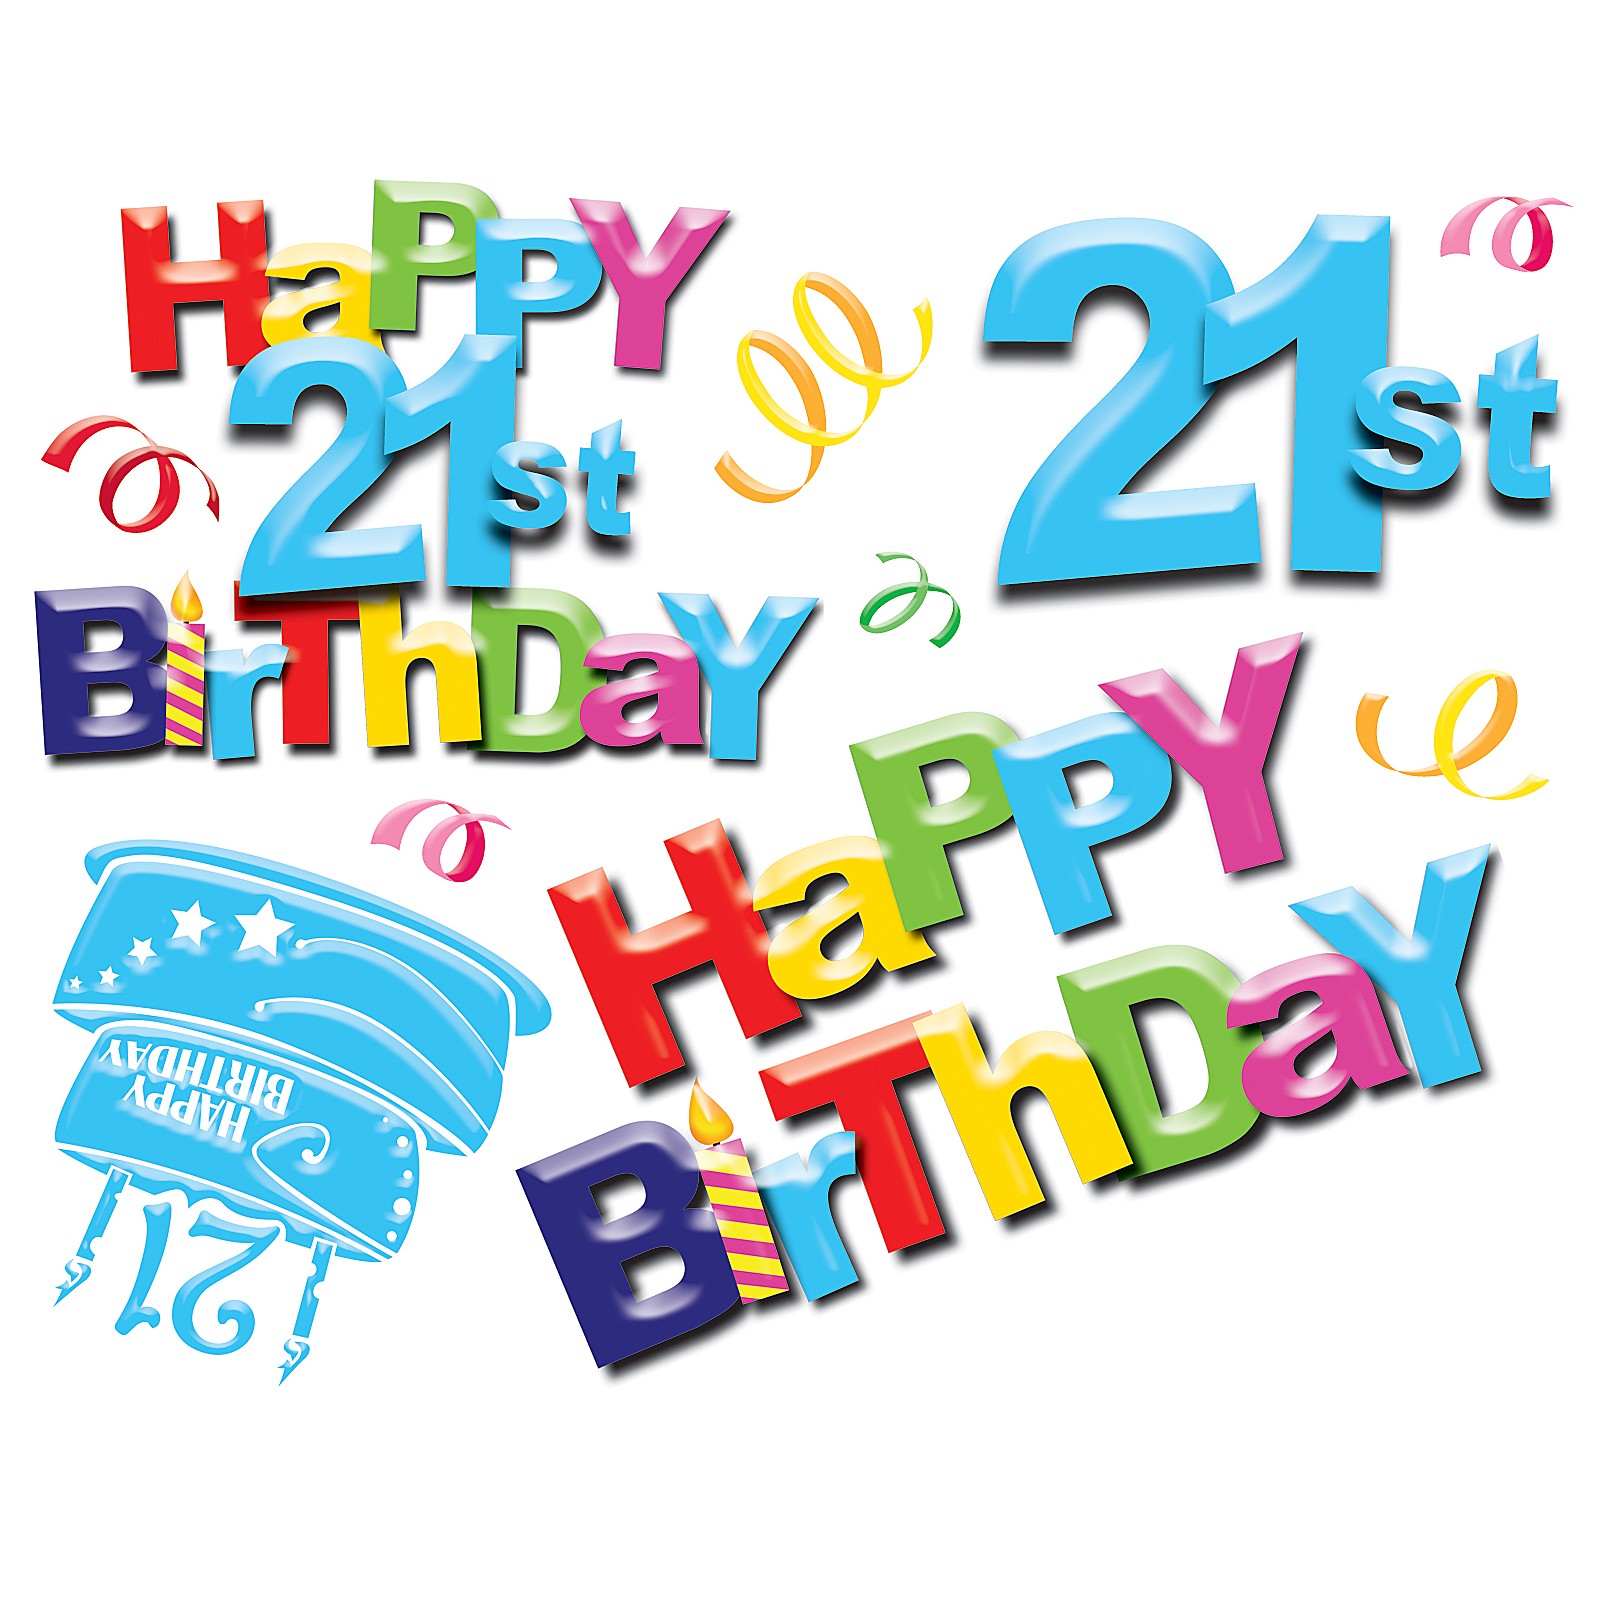 21 21st Birthday Cake - ClipArt Best - ClipArt Best